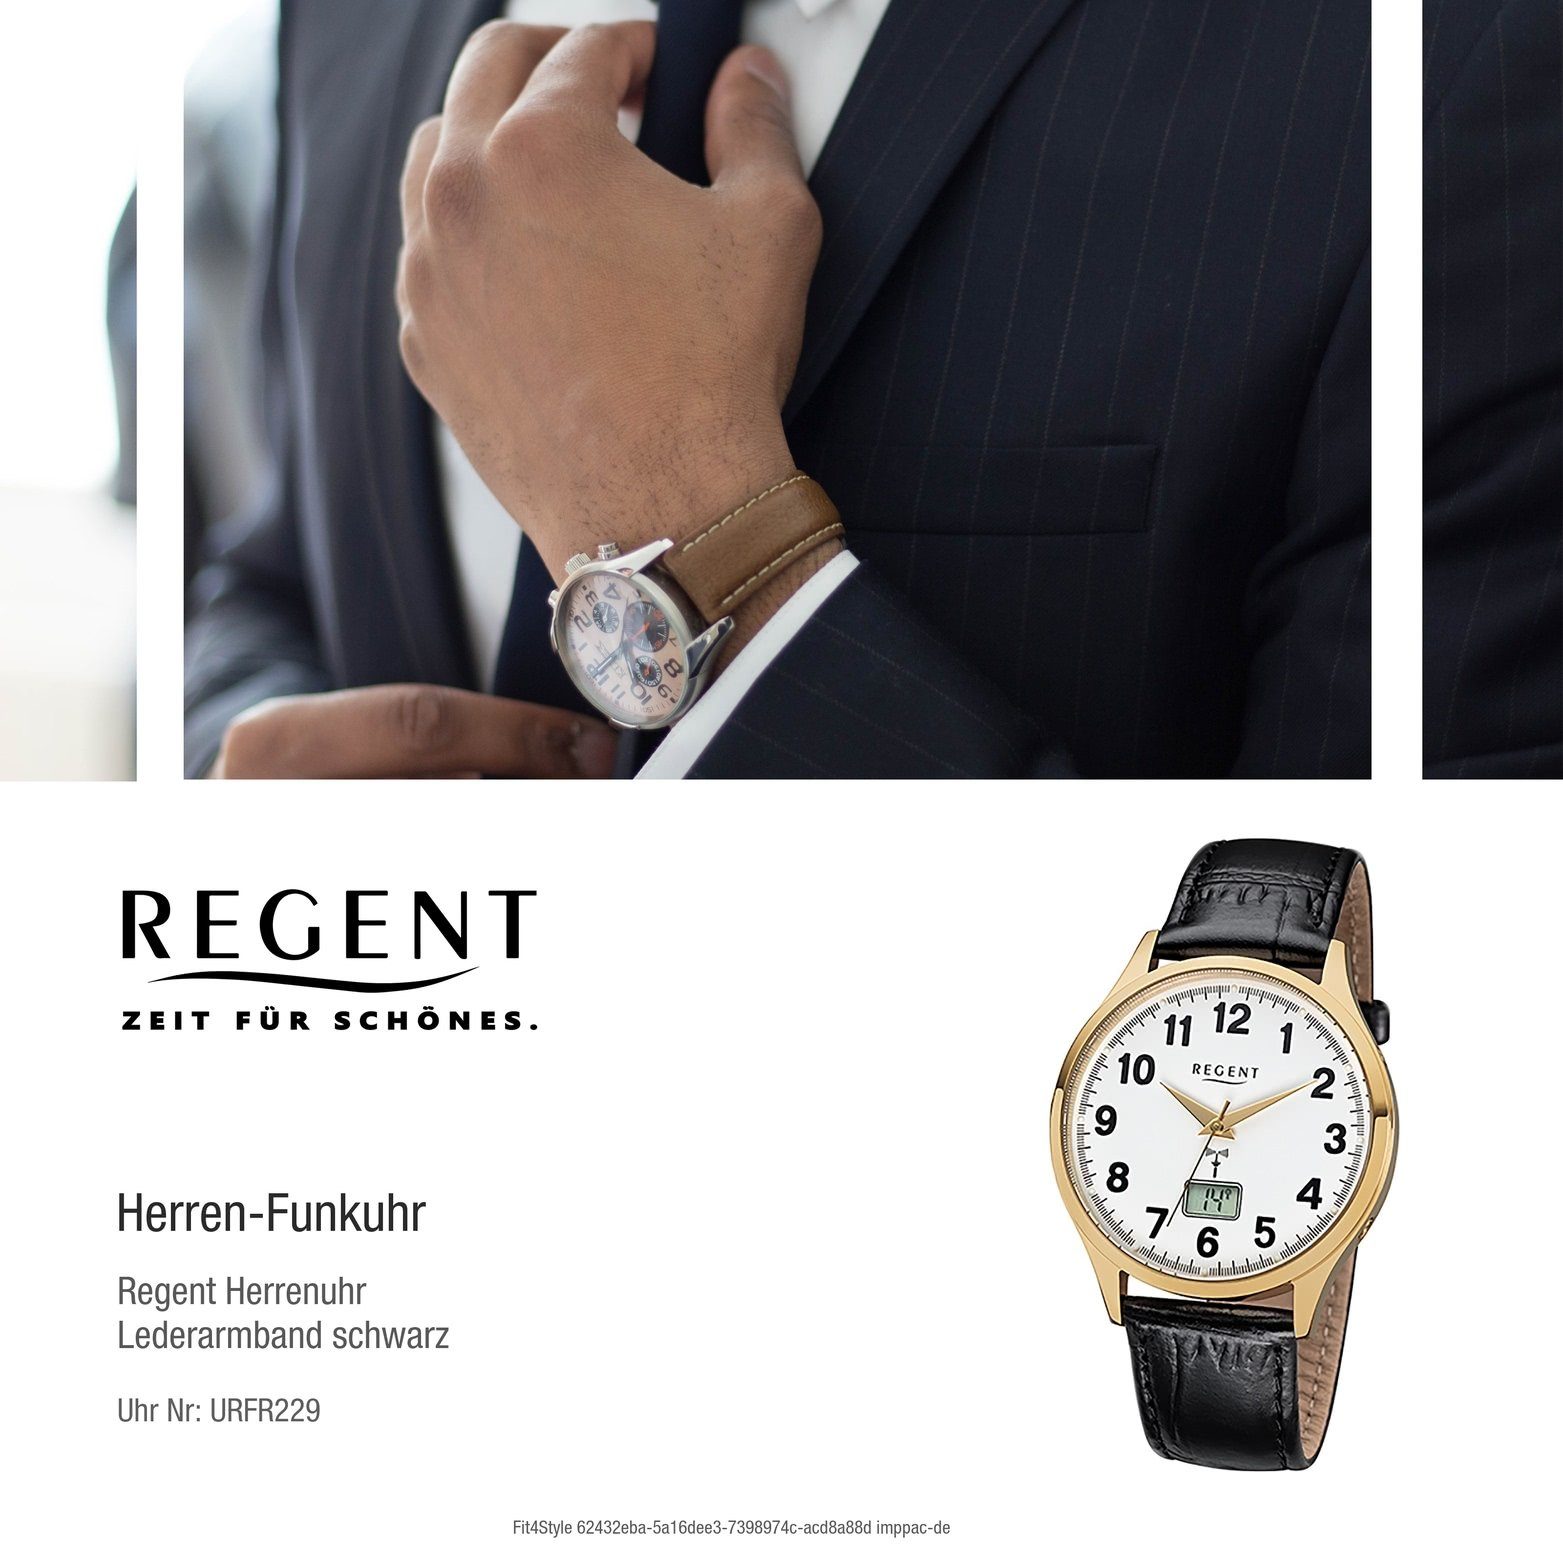 Regent Funkuhr Regent Leder 40mm), Herren Funkuhr, Lederarmband, Elegant-Style Uhr FR-229 Gehäuse, Herrenuhr (ca. rundes mit